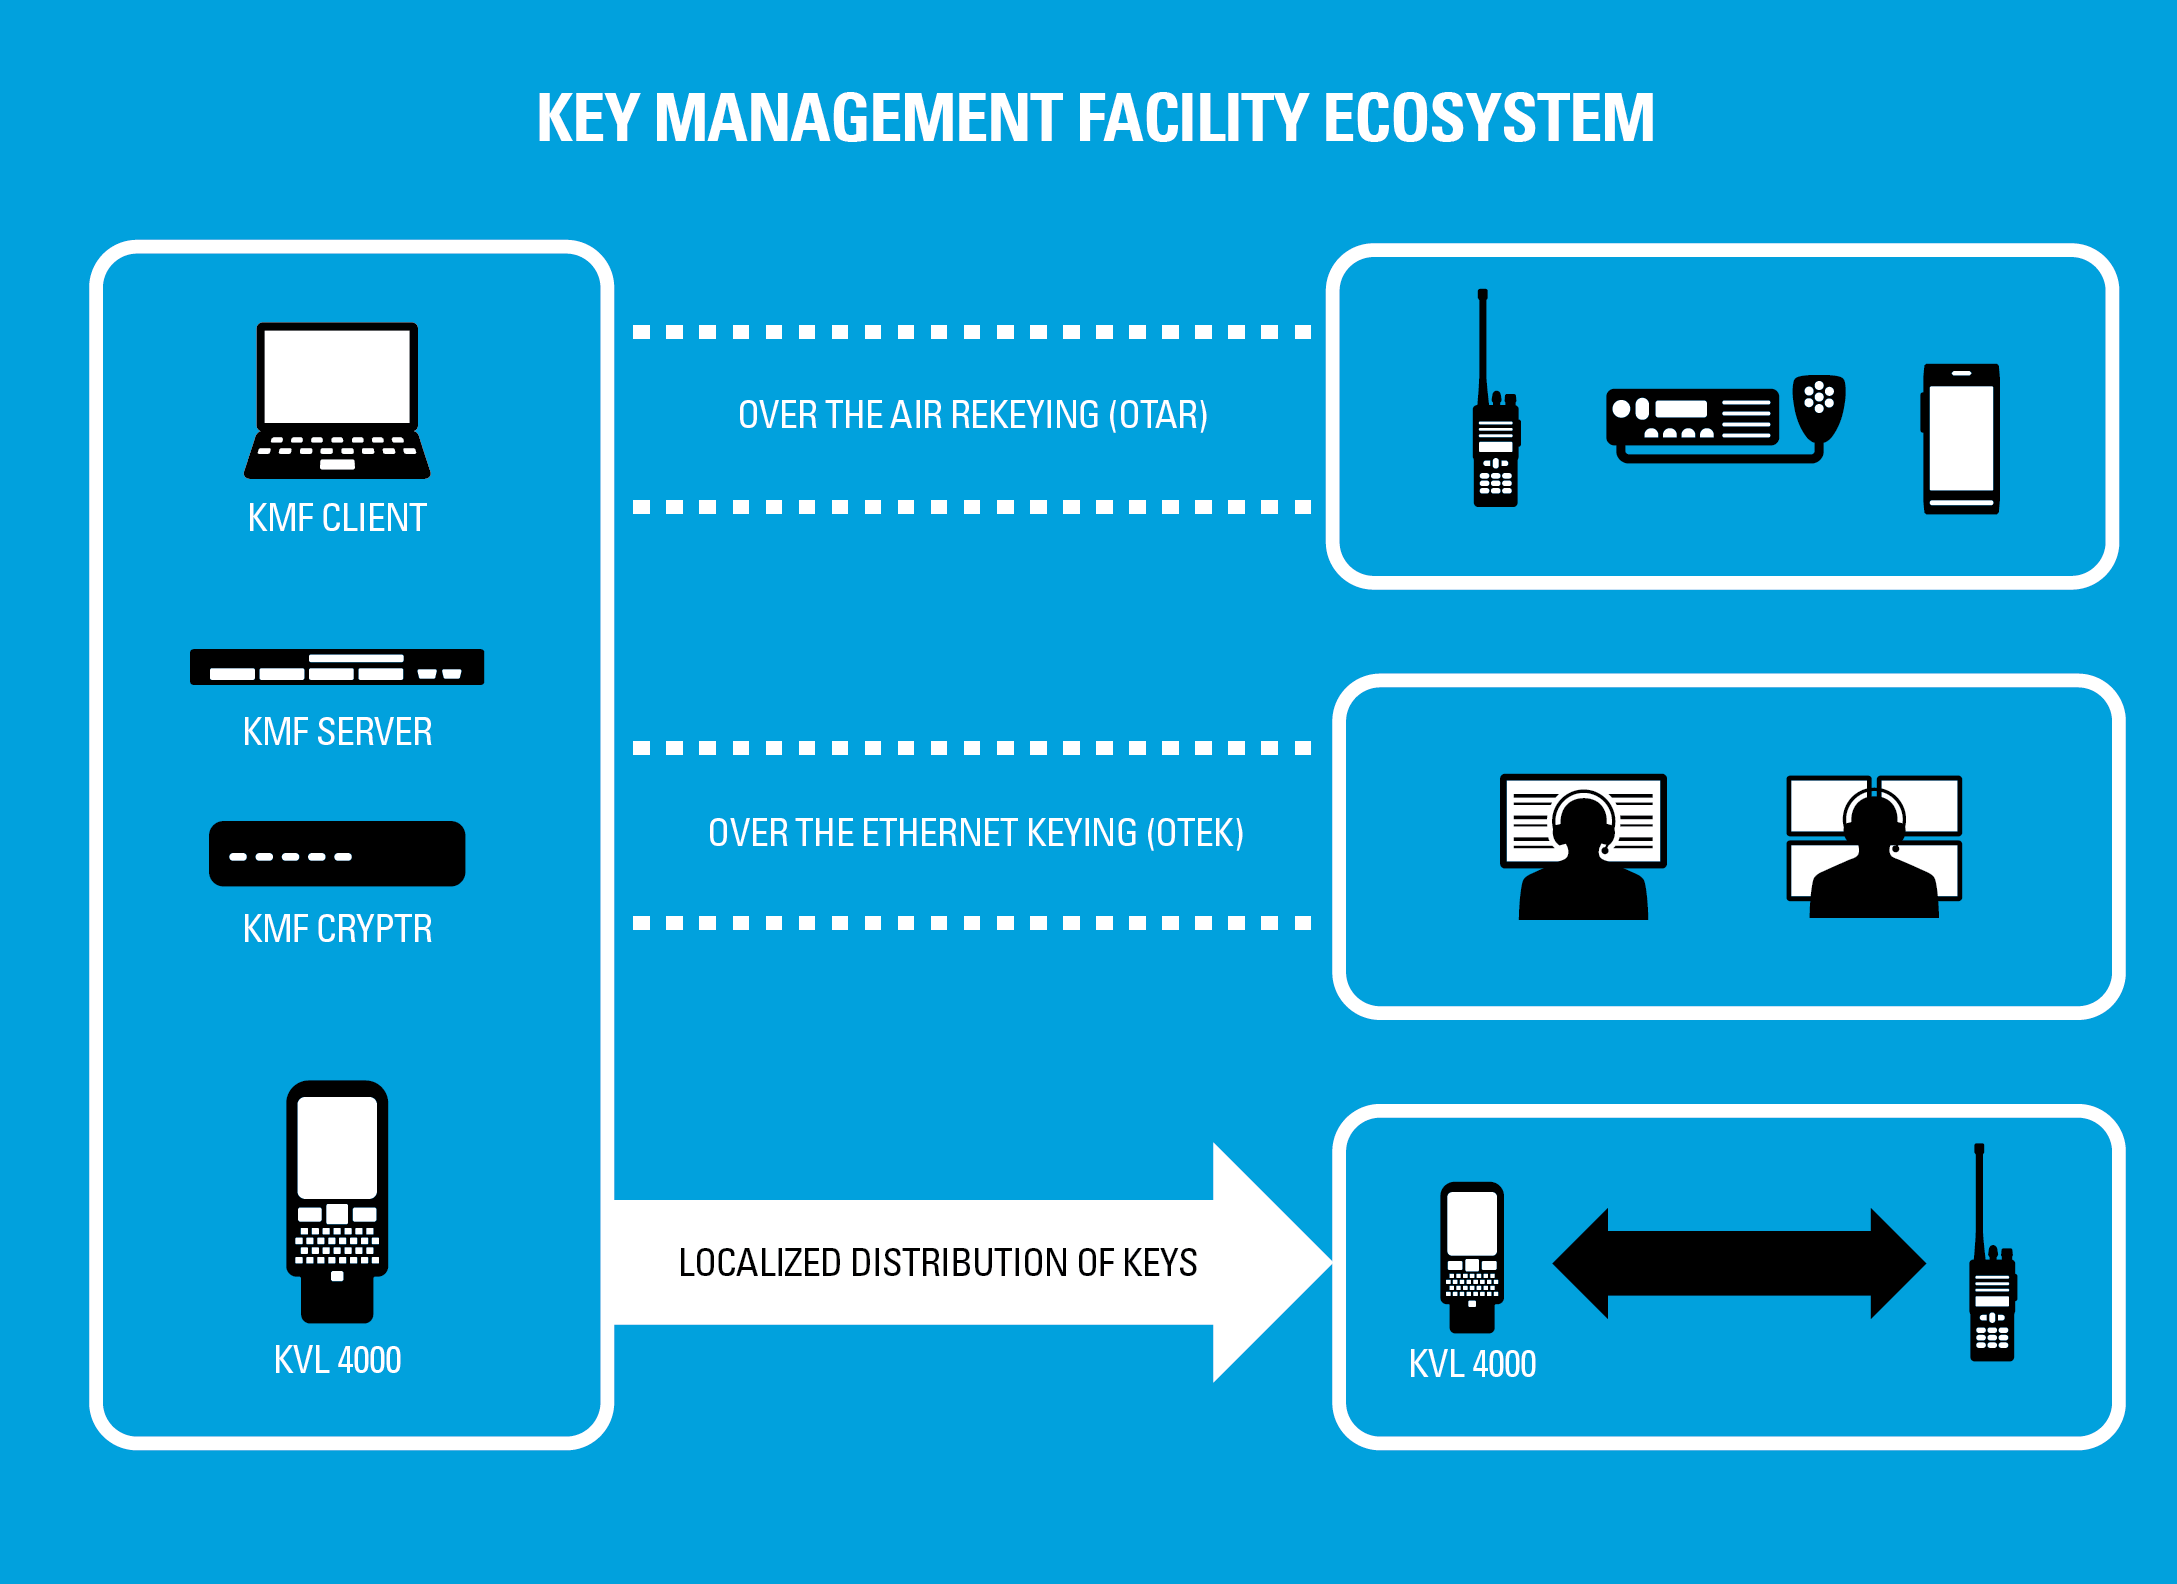 TETRA Key Management Facility Ecosystem